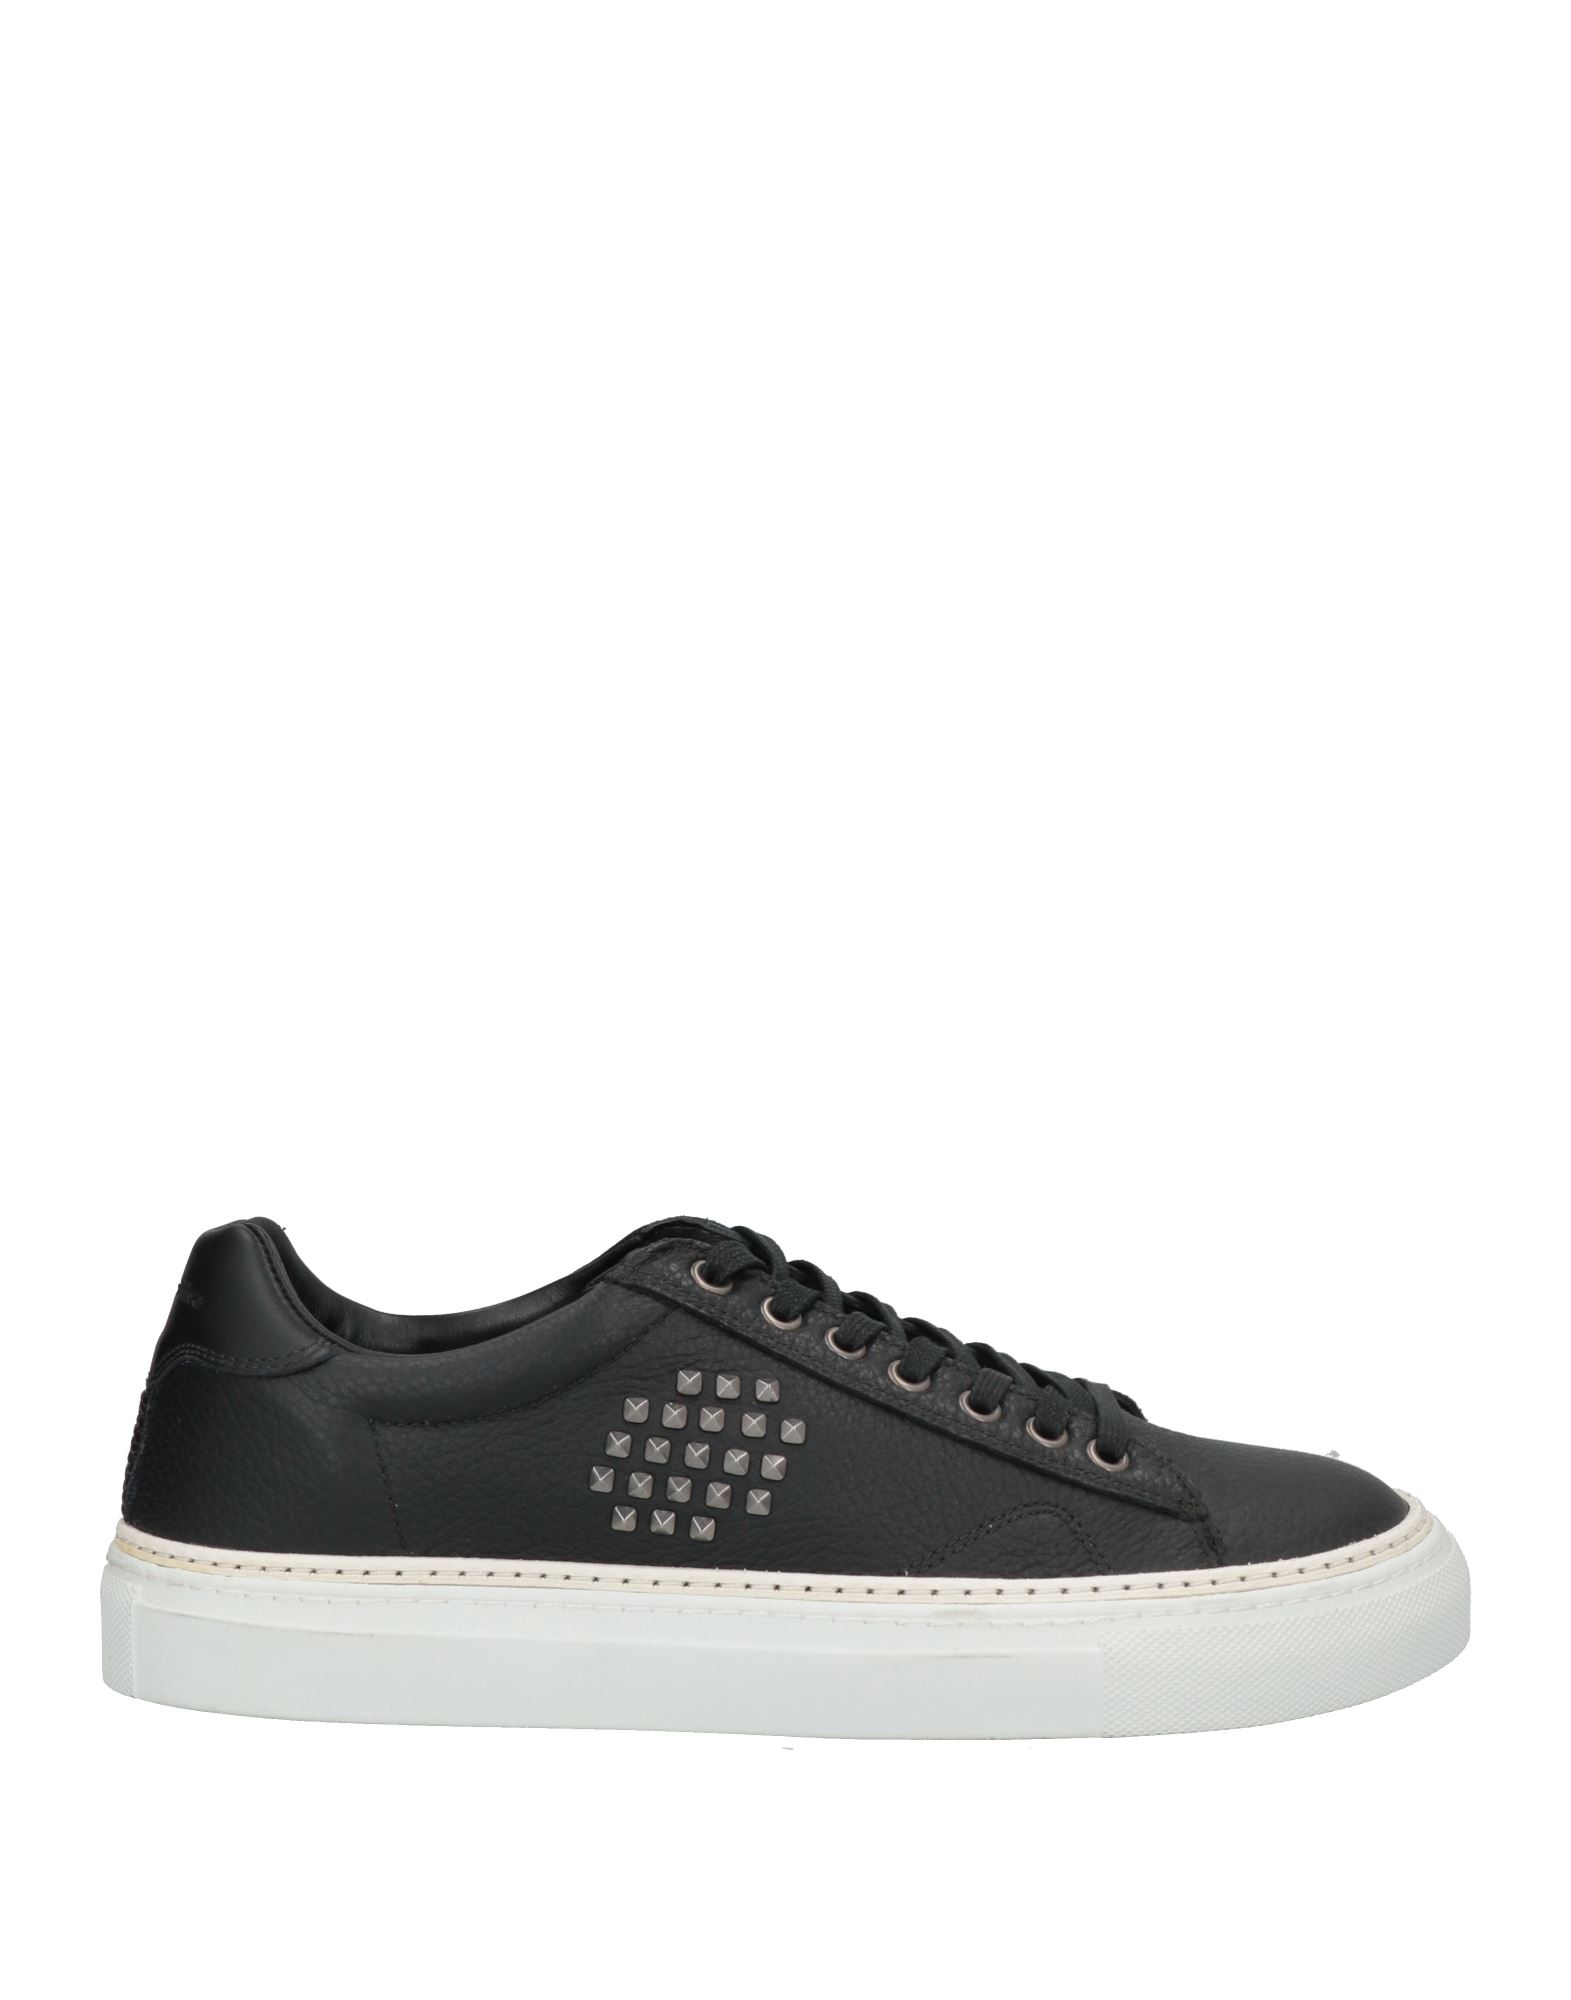 Shop Bepositive Man Sneakers Black Size 8 Soft Leather